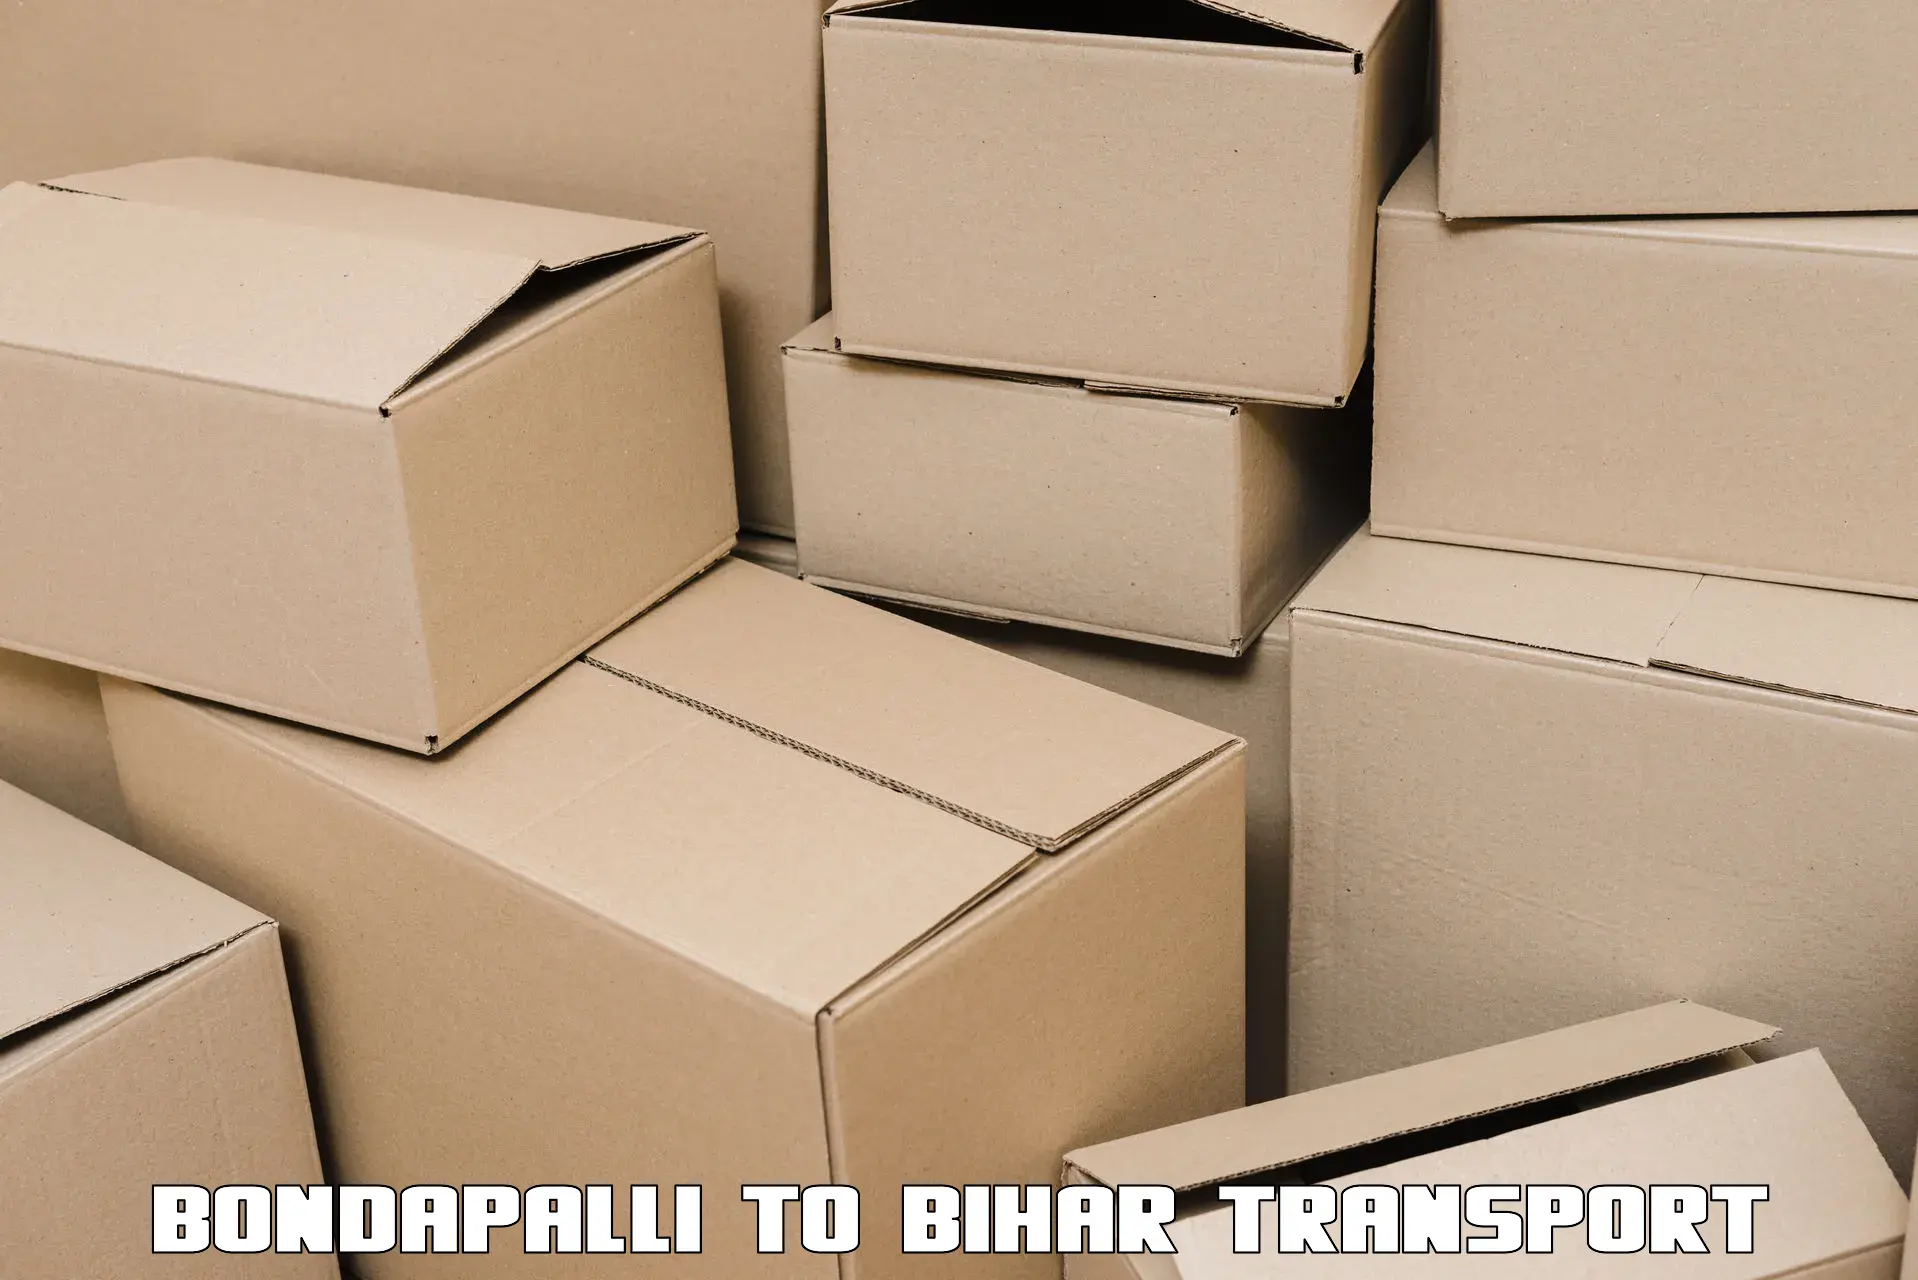 Truck transport companies in India Bondapalli to Bankipore